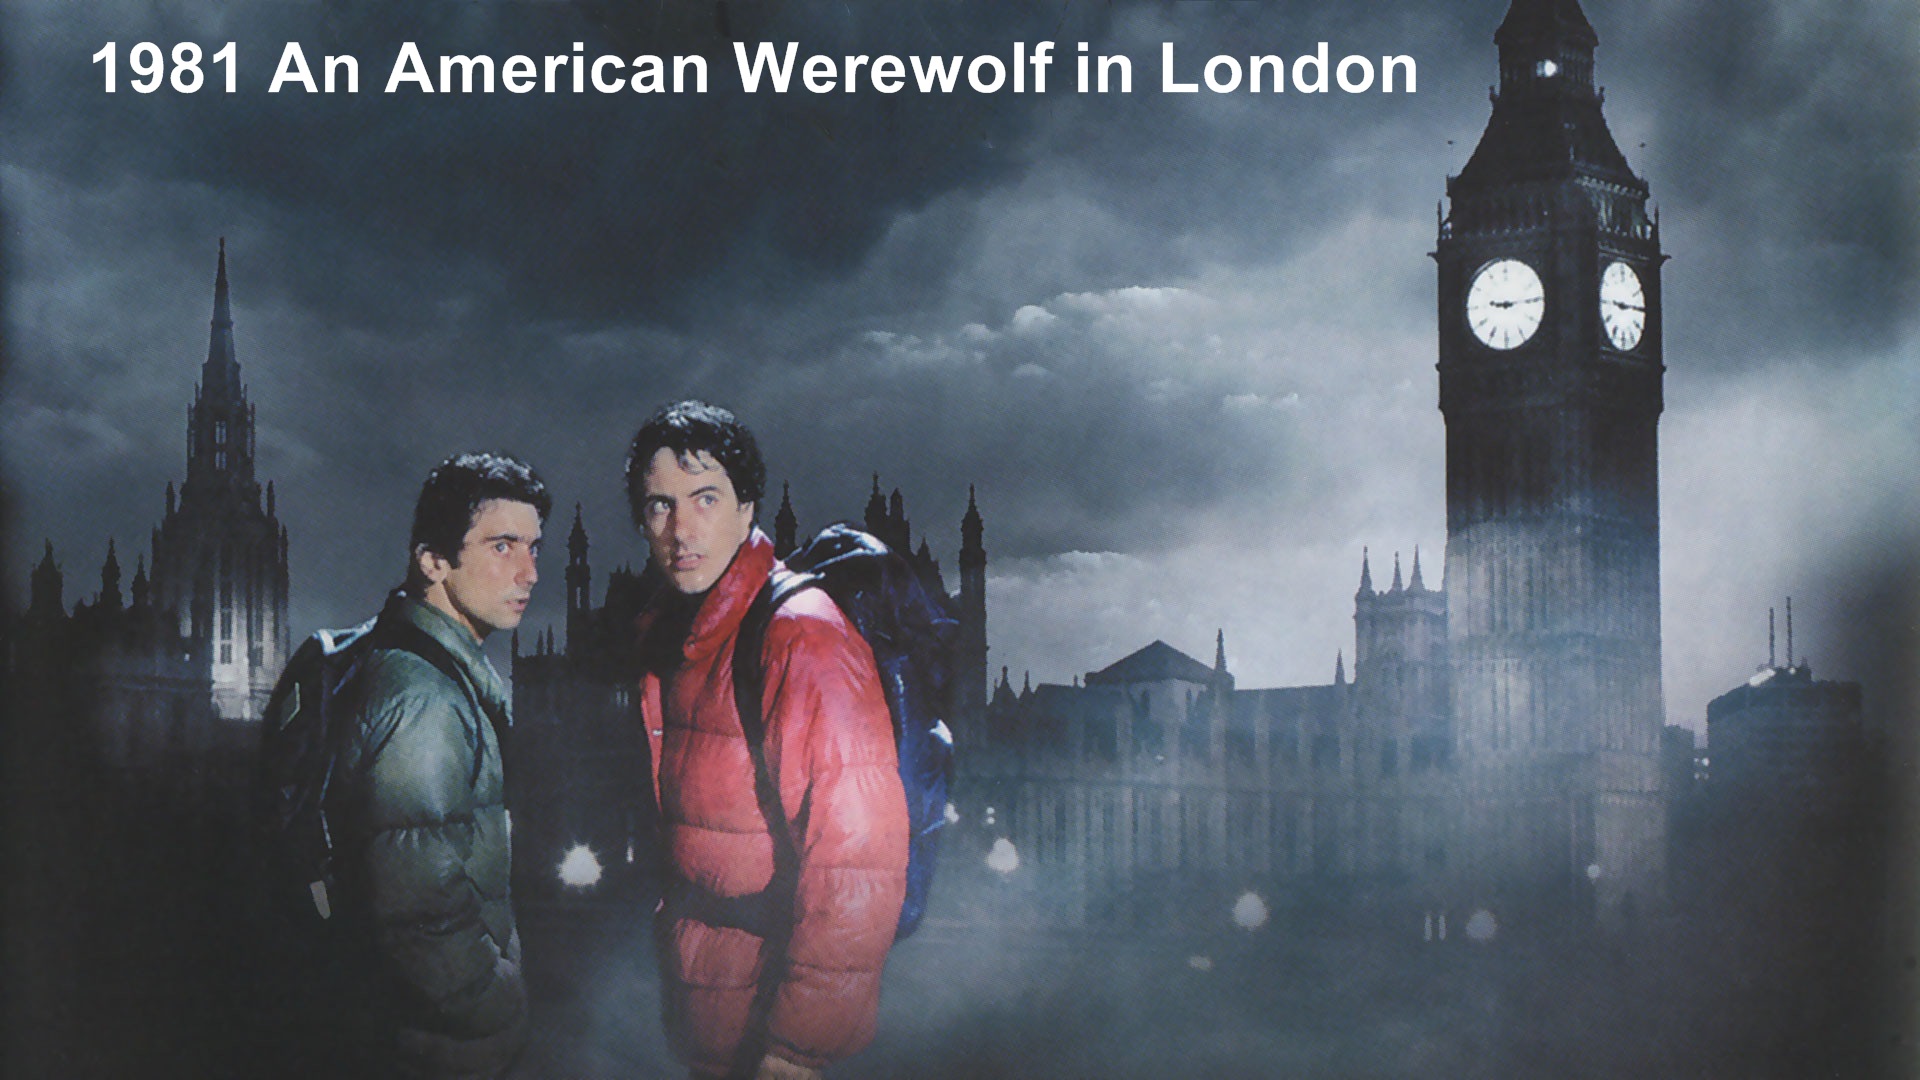 An American Werewolf in London (1981) John Landis, filming locations